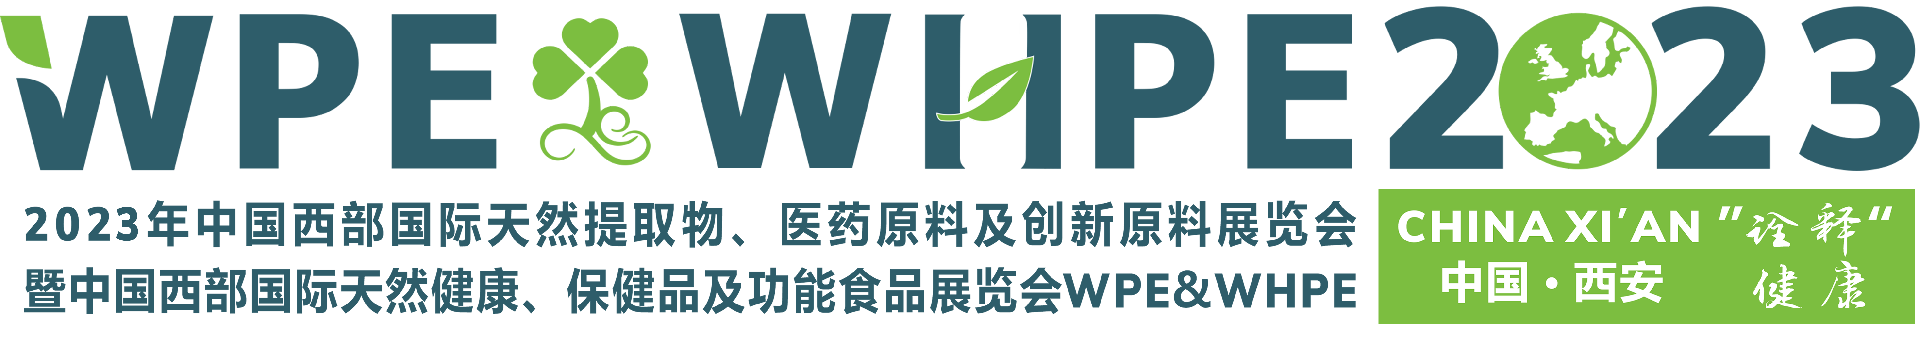 WPE&WHPE 2023西部天然展三大主题展